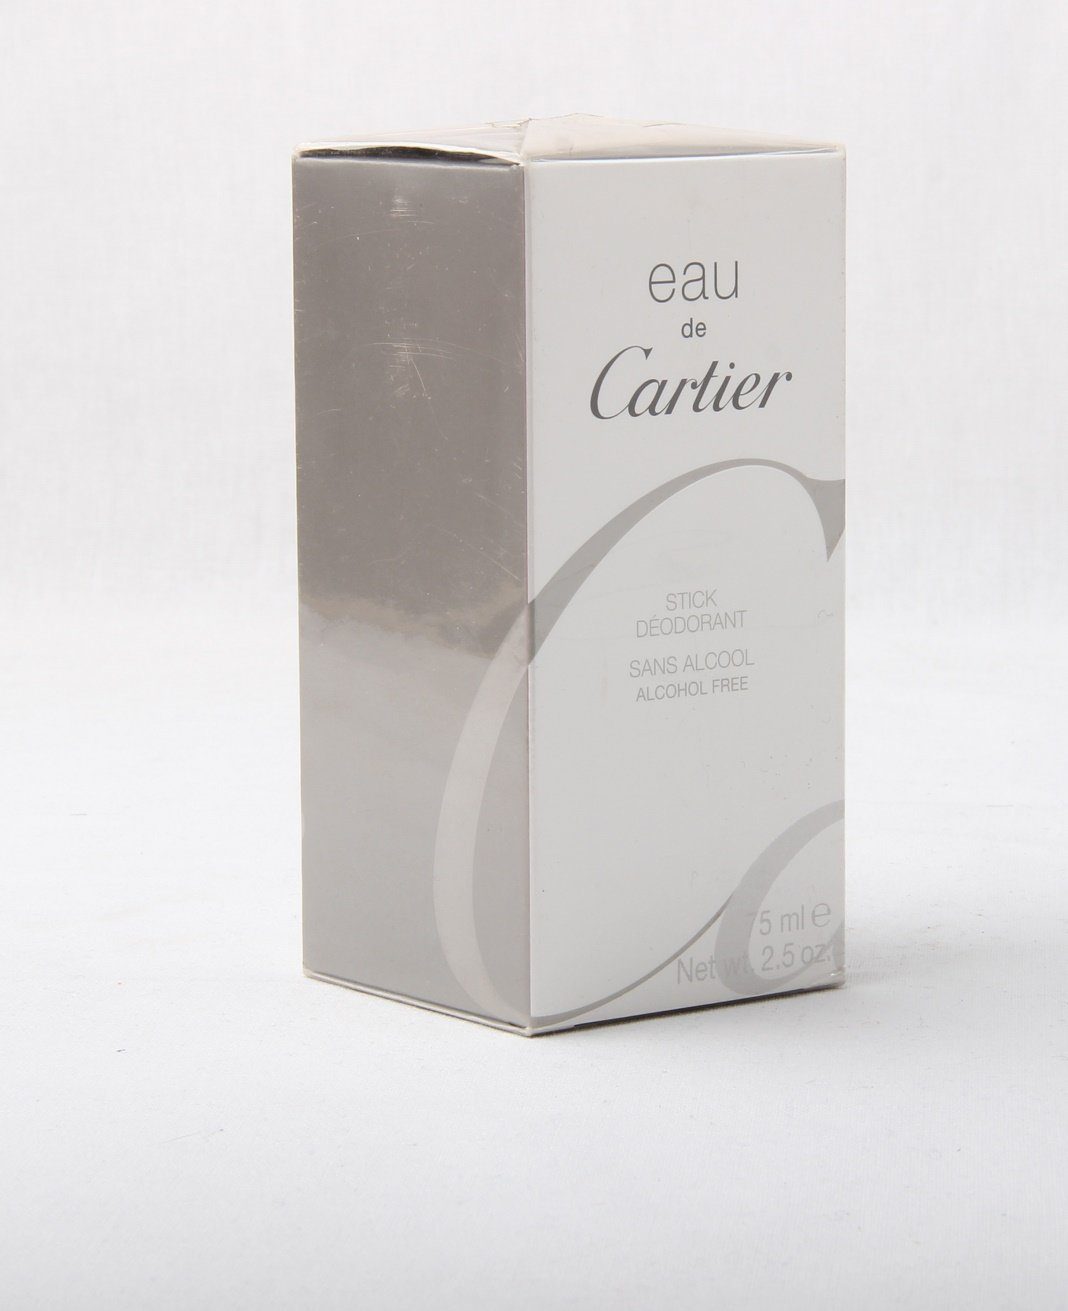 Cartier Körperspray Eau Stick de Cartier 75ml Deodorant